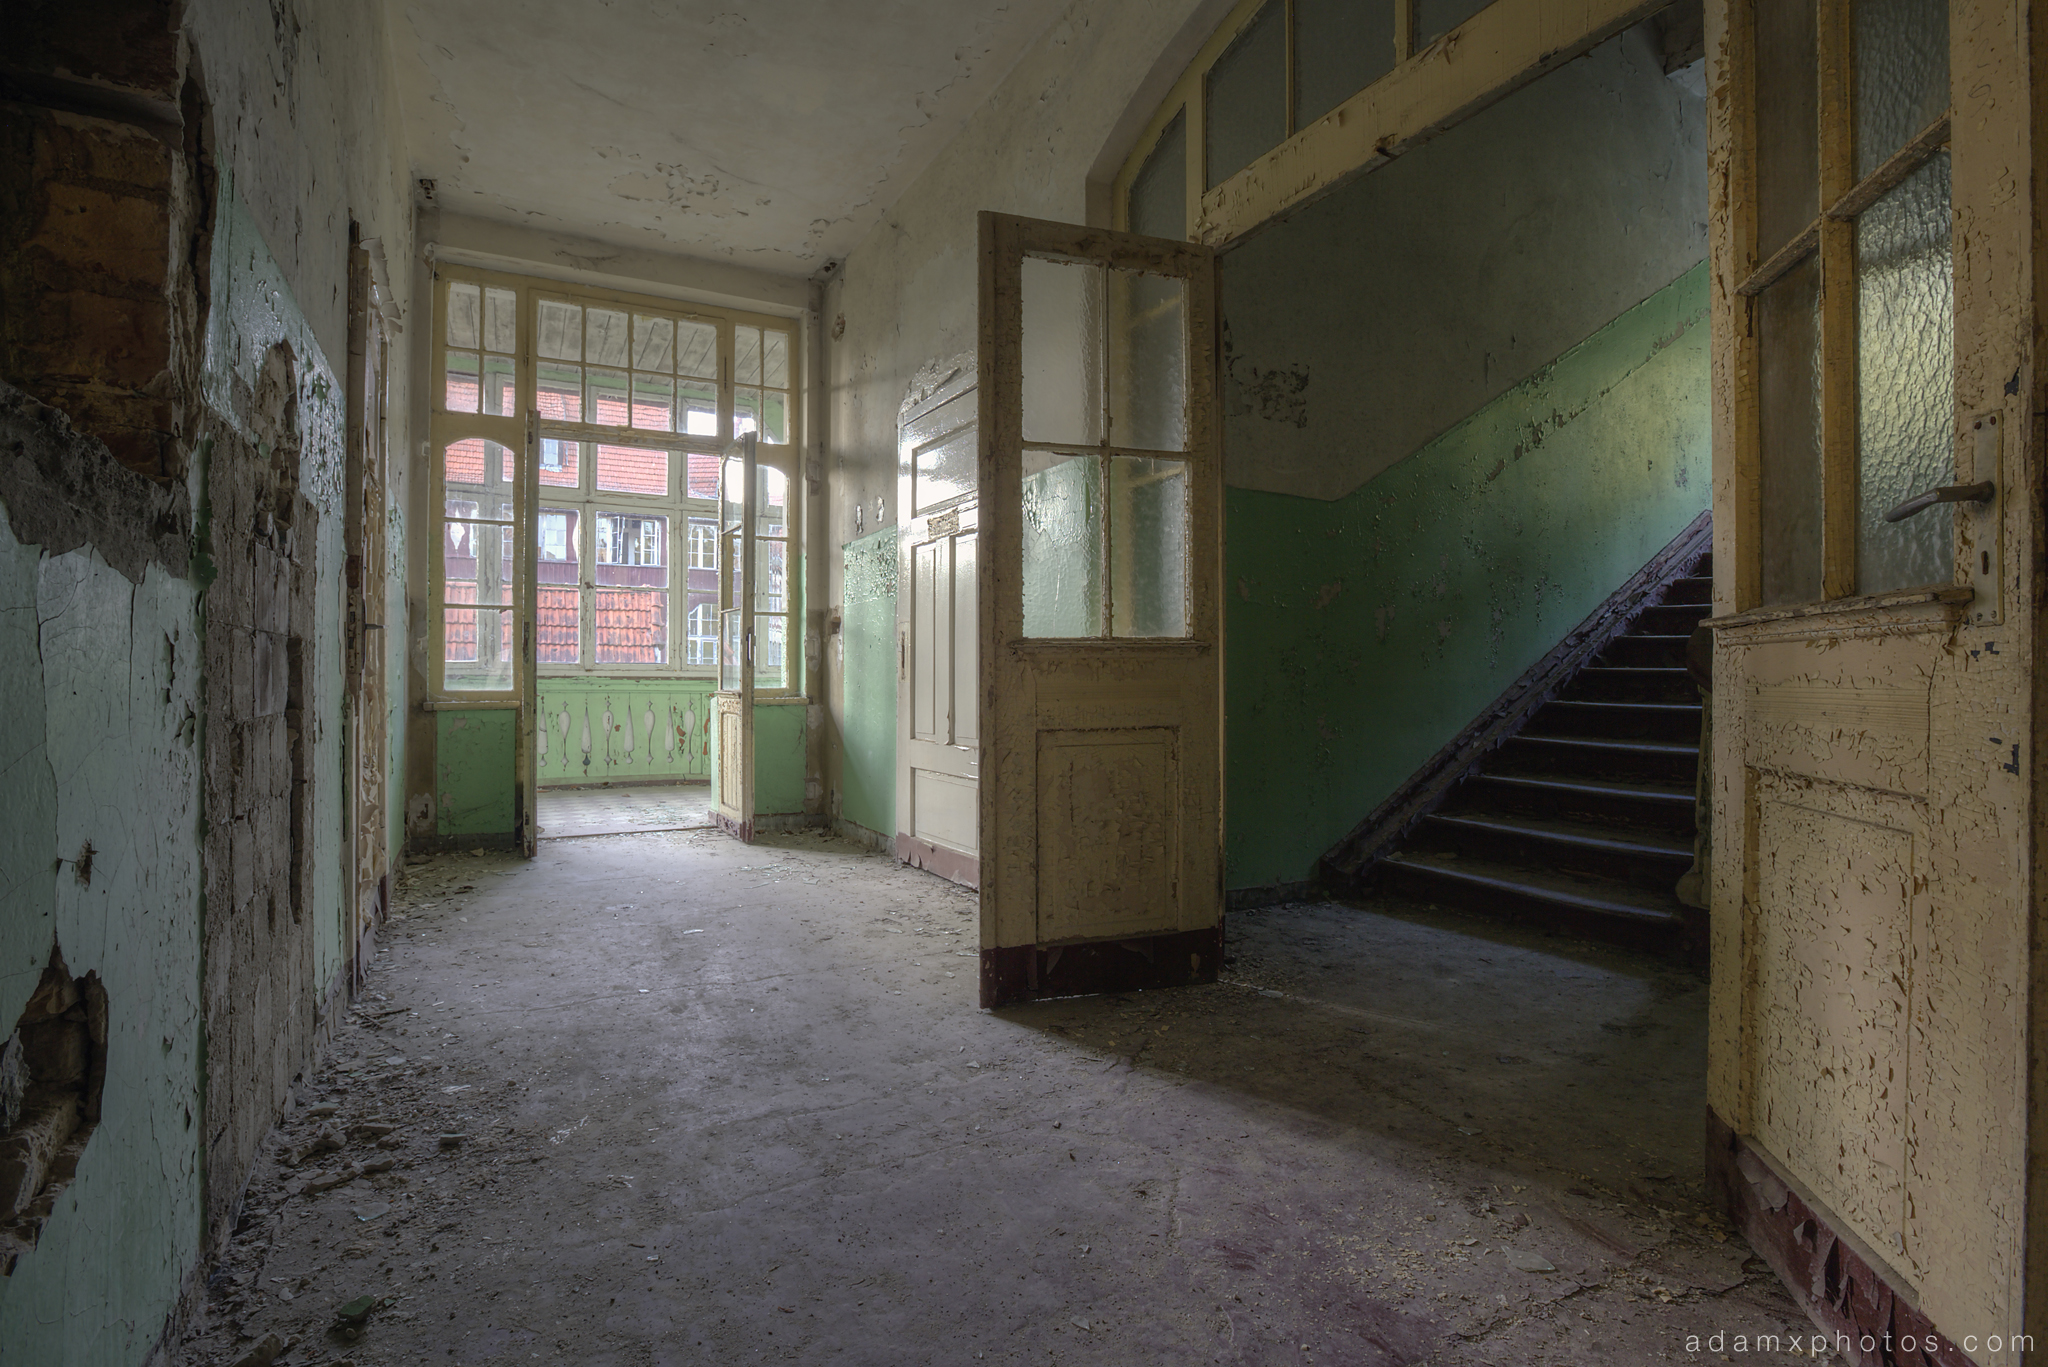 Adam X Urbex Heilstatten Hohenlychen Germany Urban Exploration Decay Lost Abandoned Hidden corridor stairs window